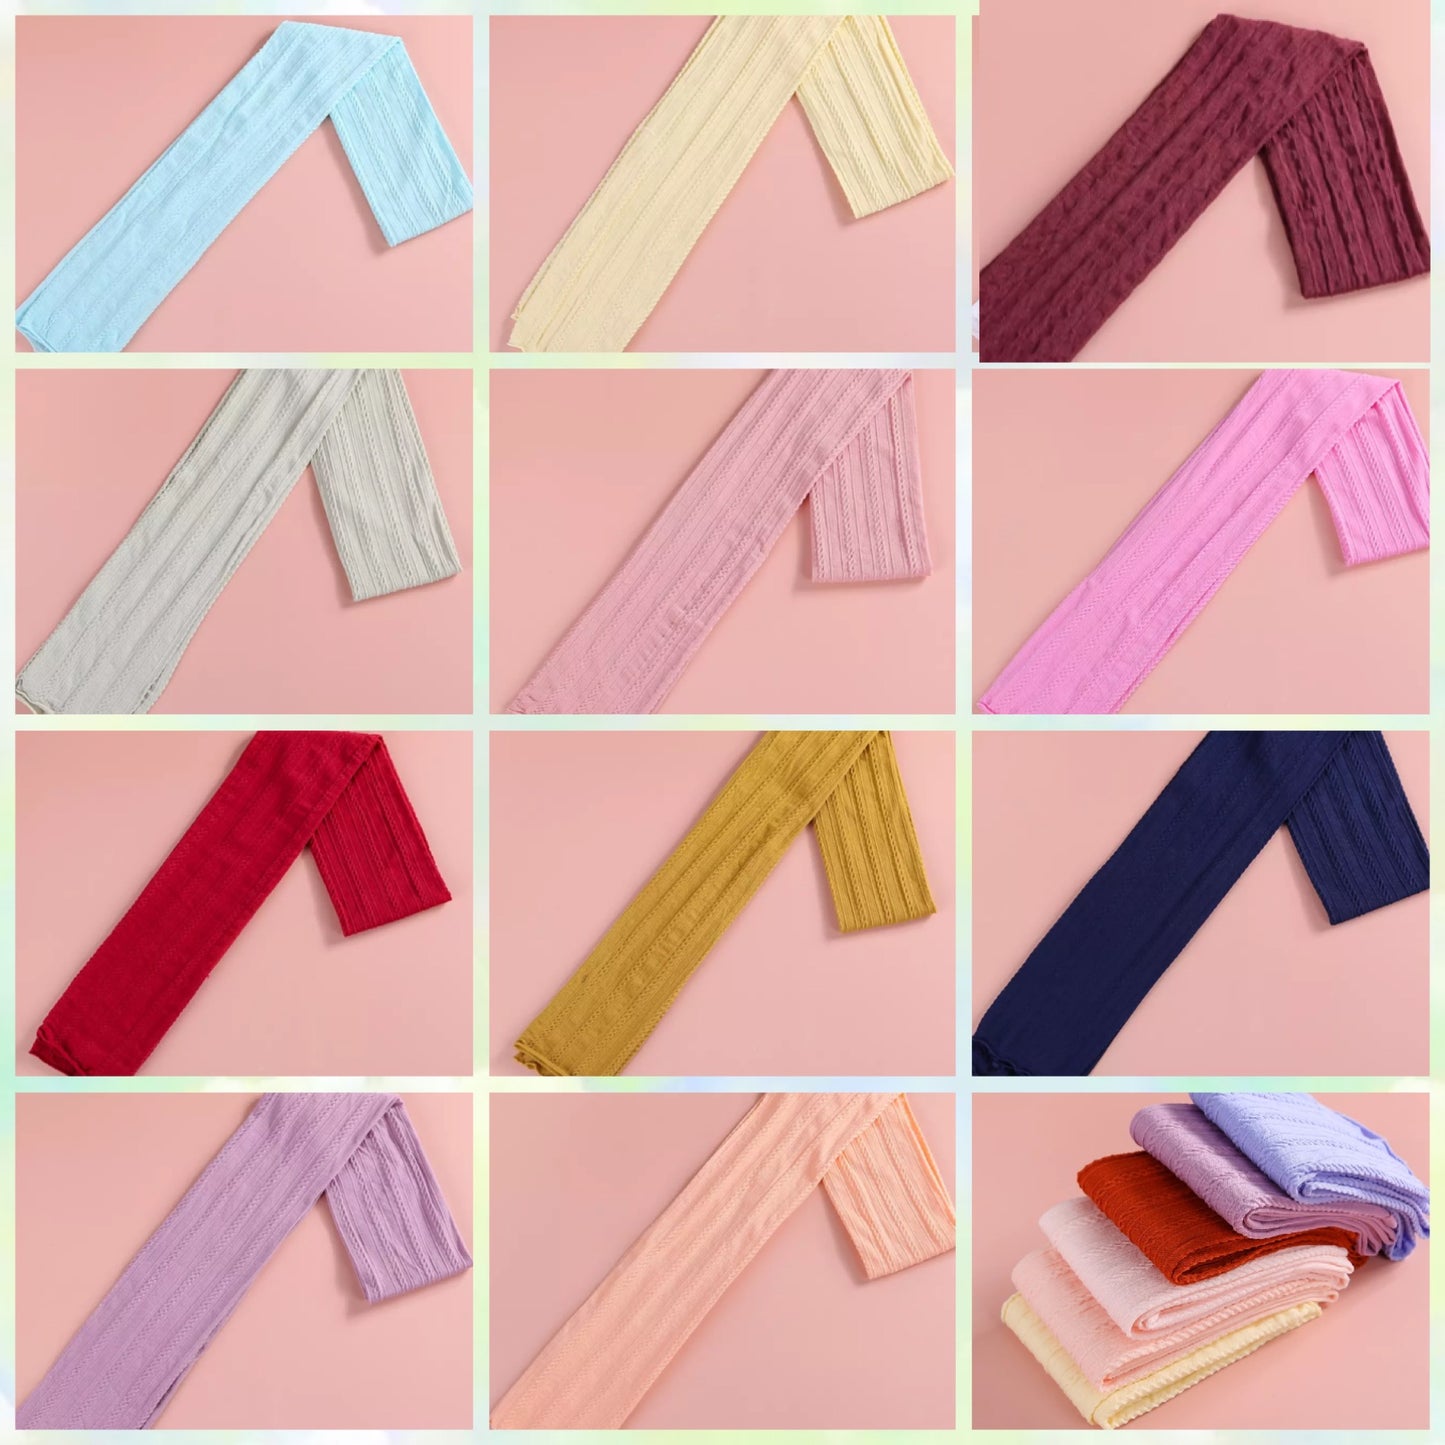 Super stretch nylon woven patterned  strips